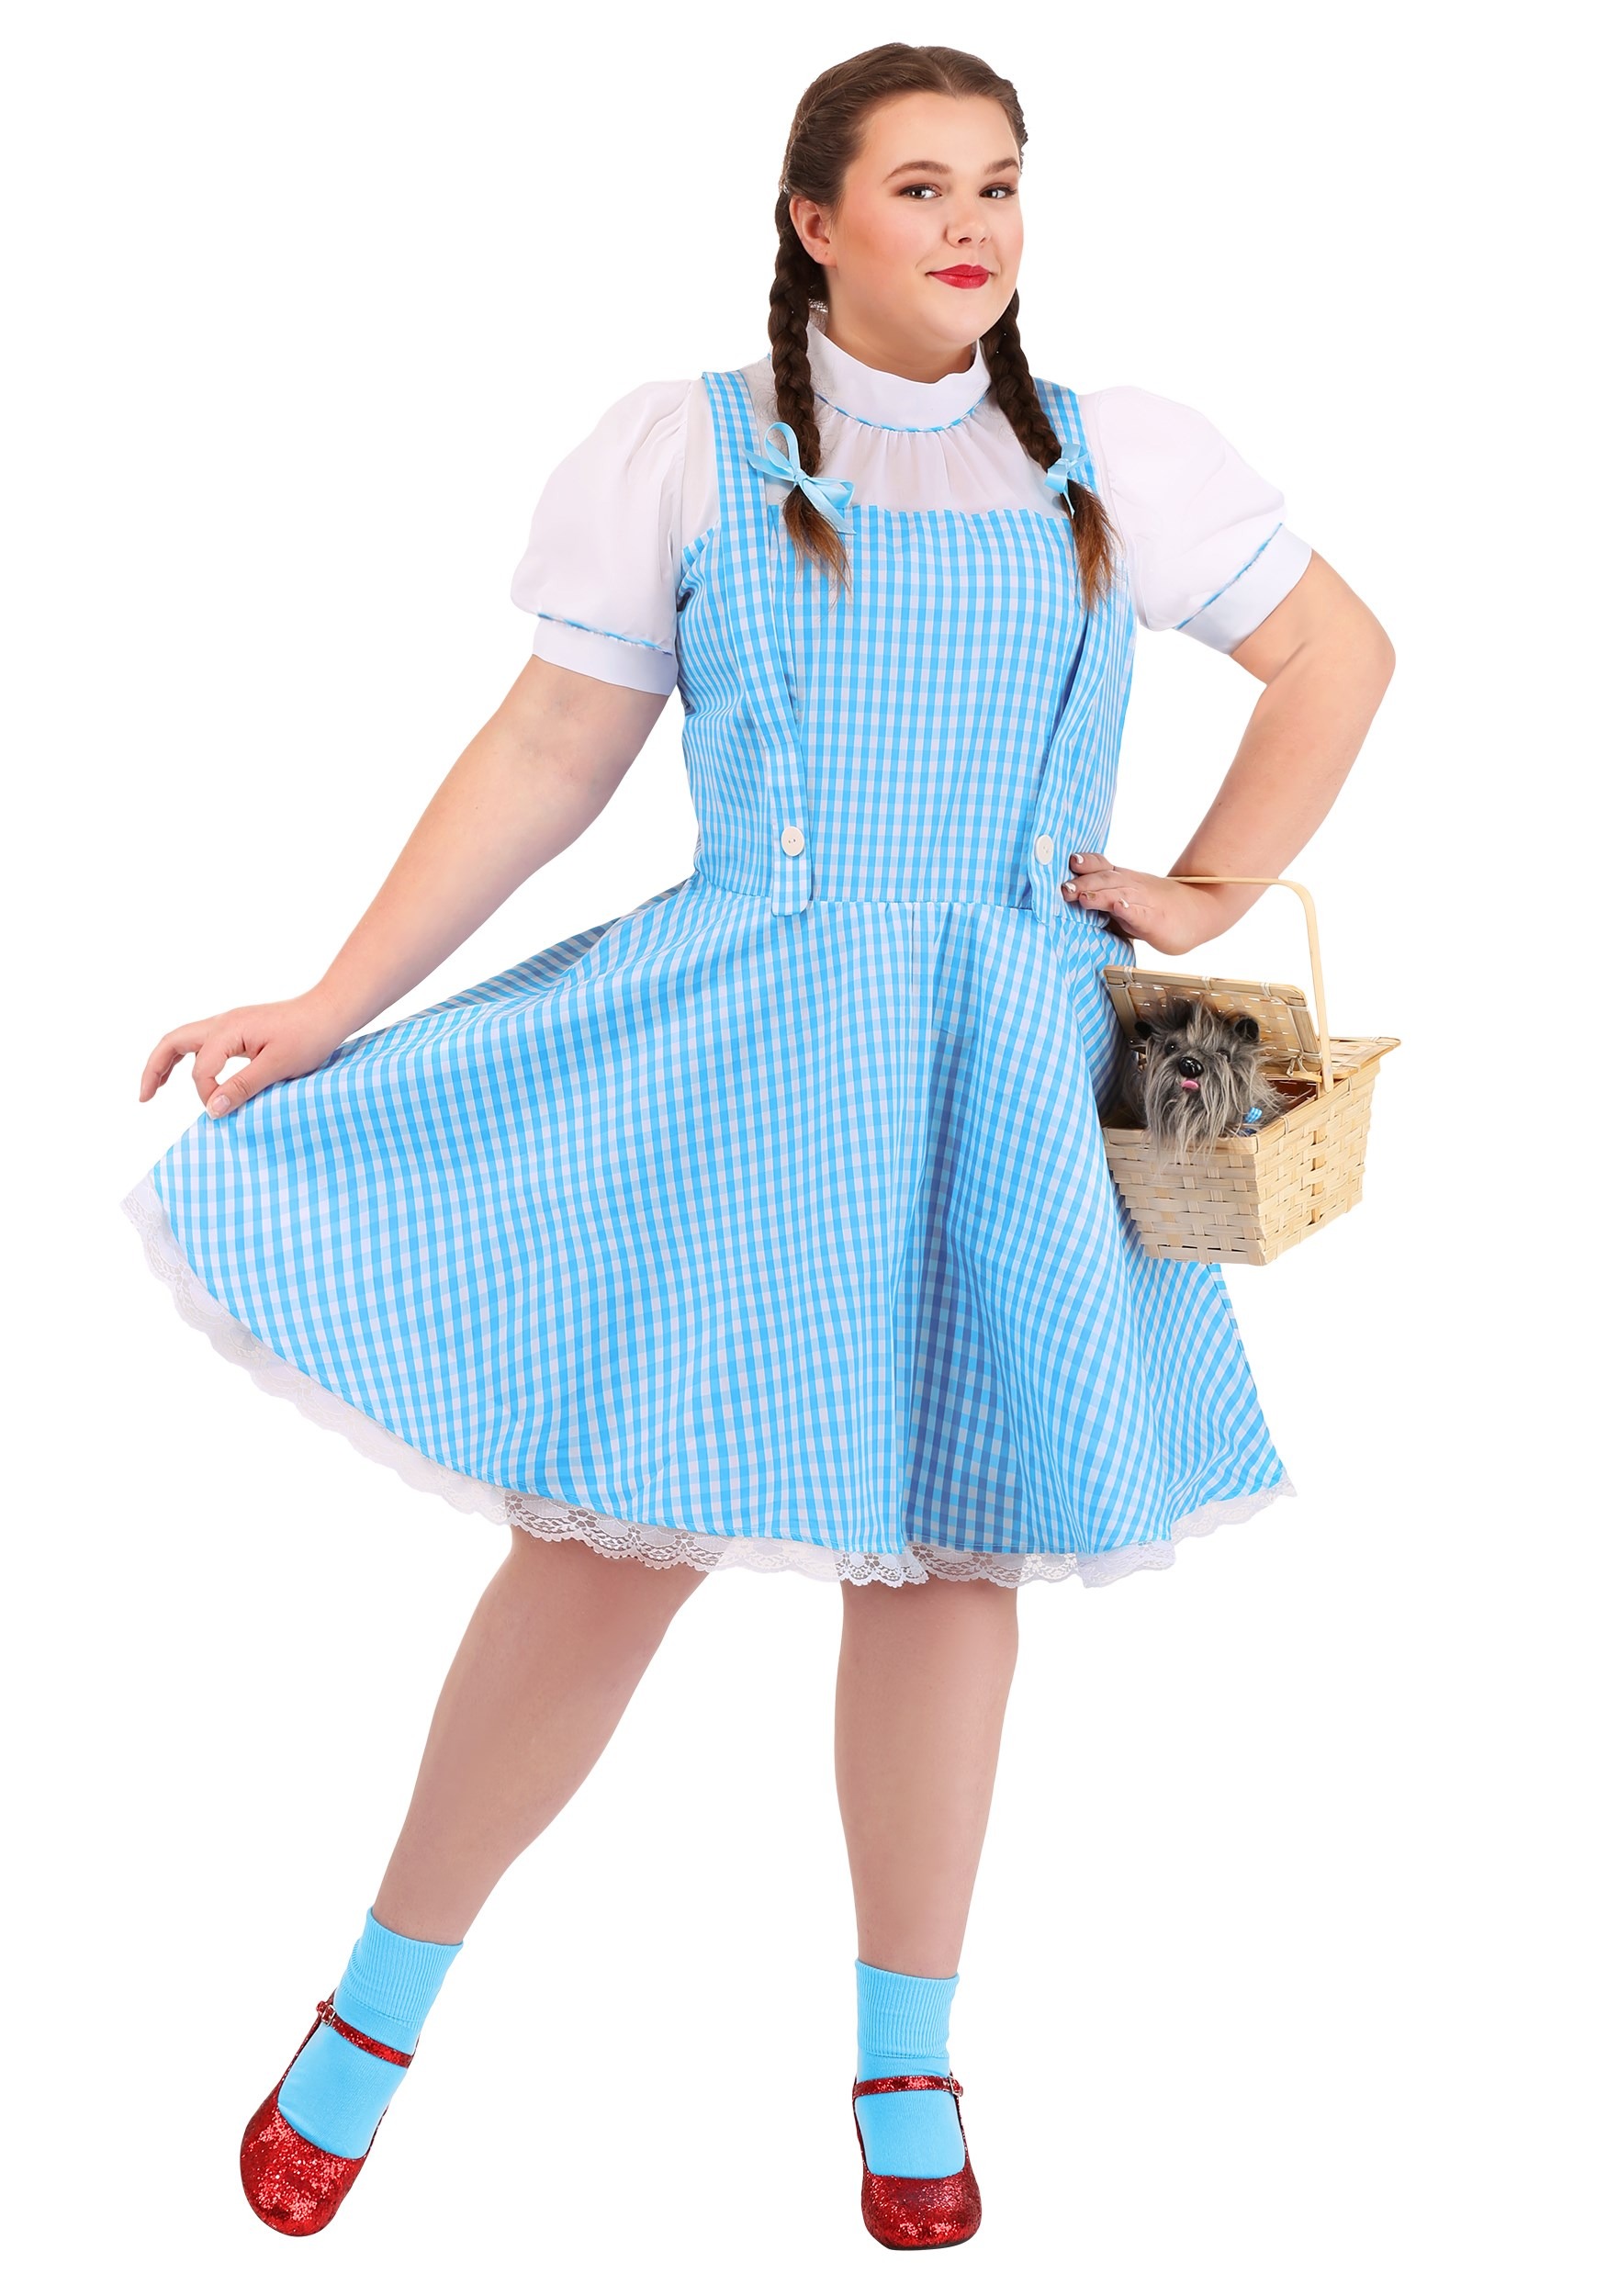 Plus Size Wizard of Oz Dorothy Costume